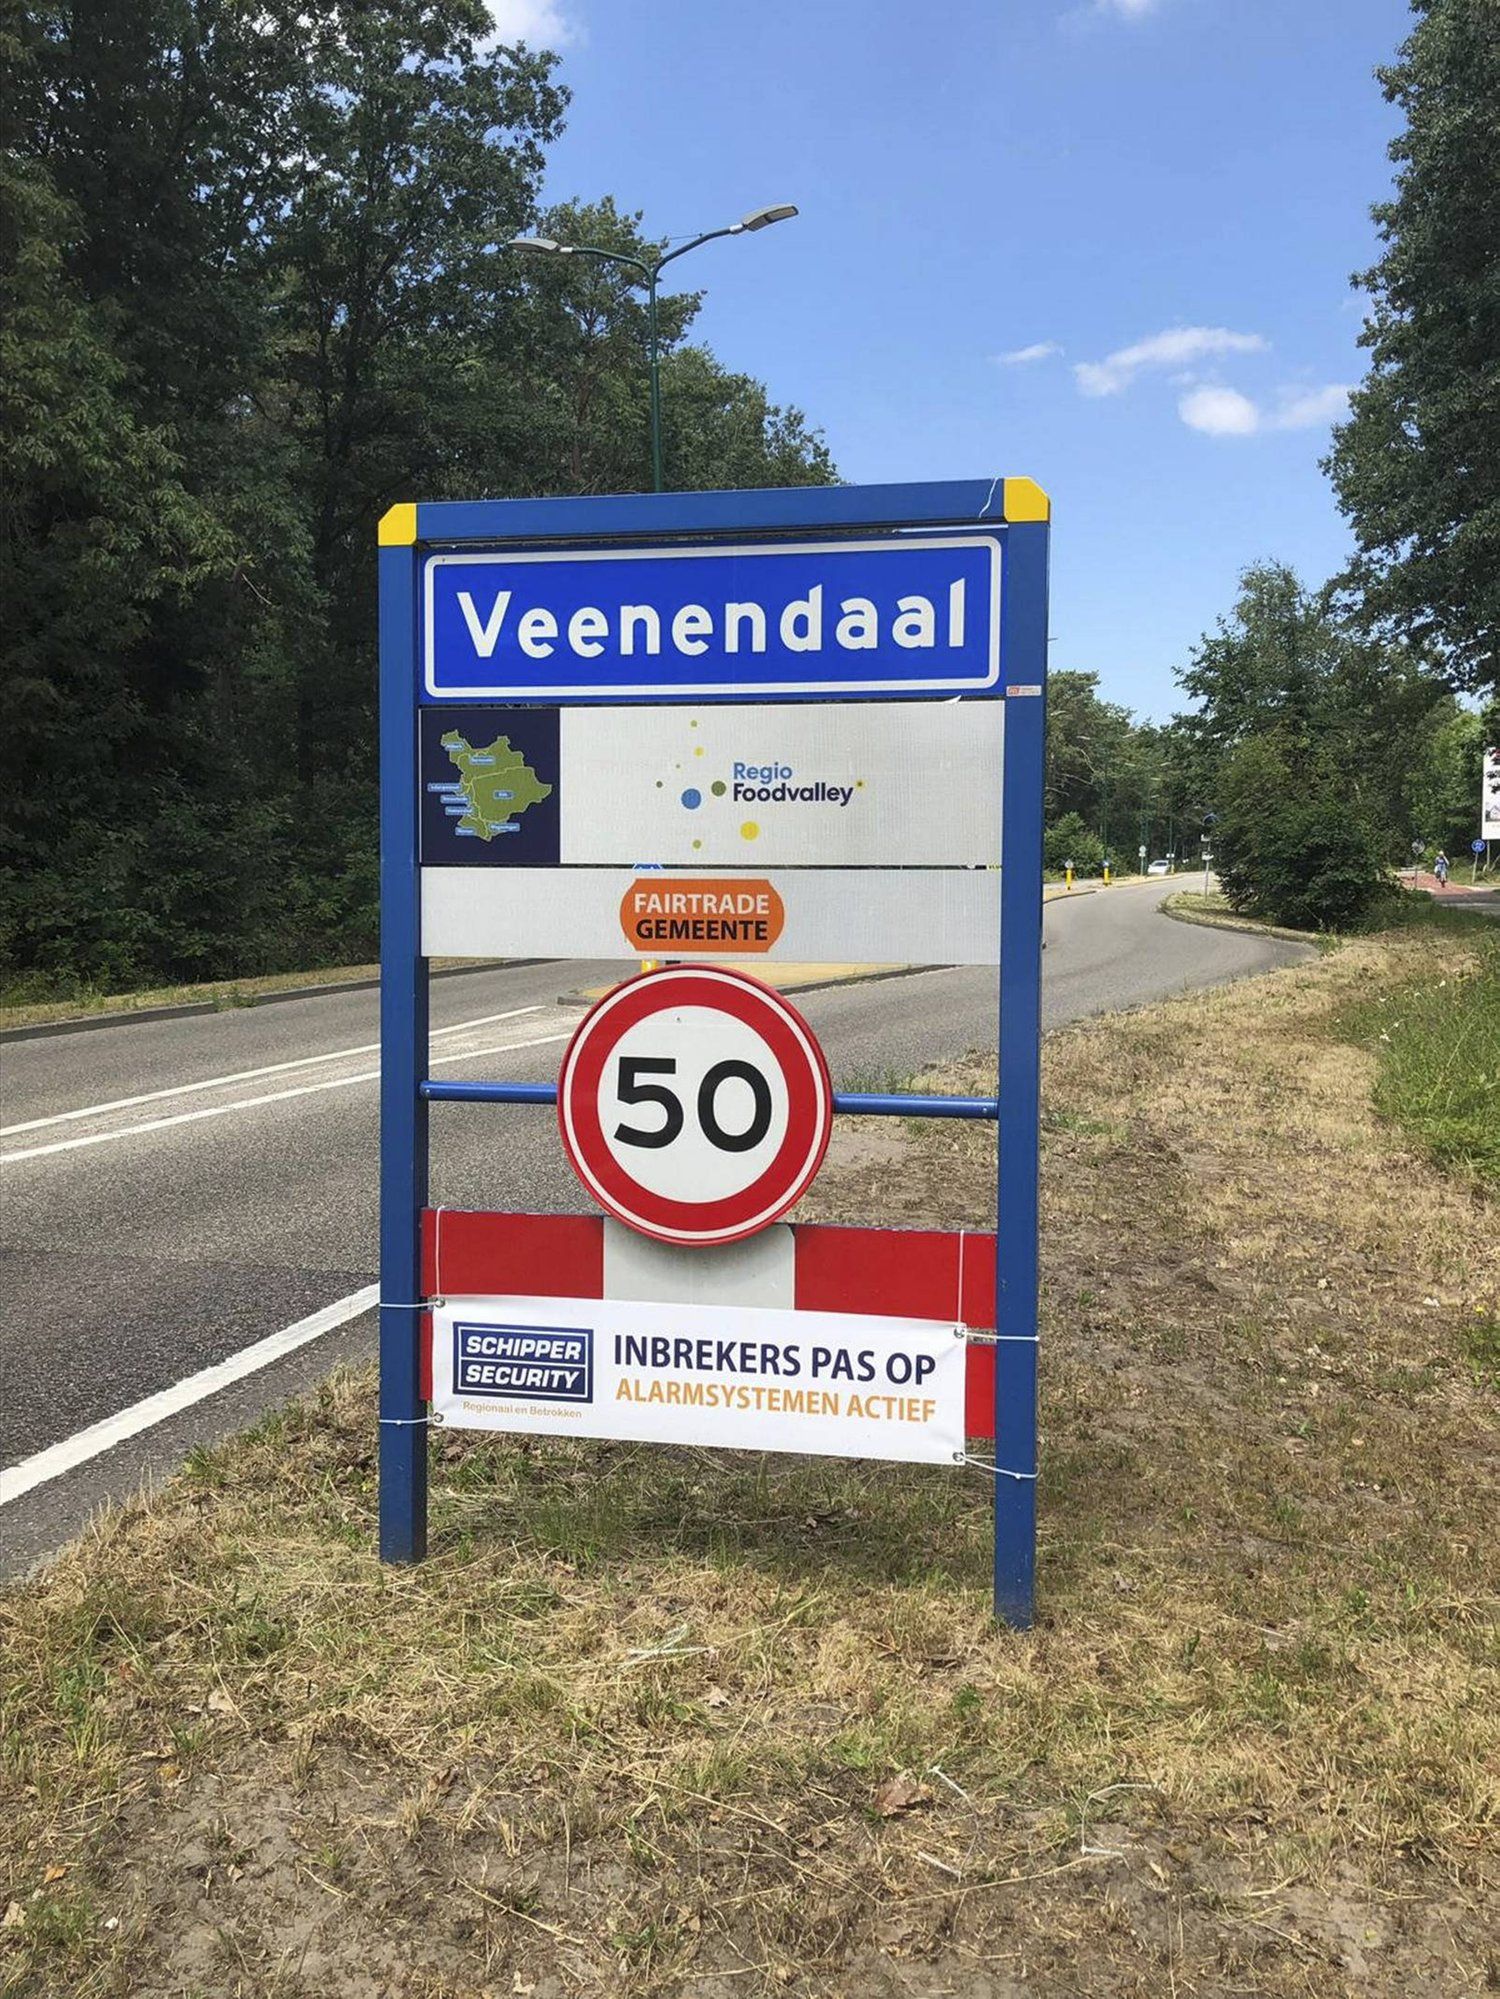 2019-07-06-REG1-bij-veenendaal6-3-FC_web